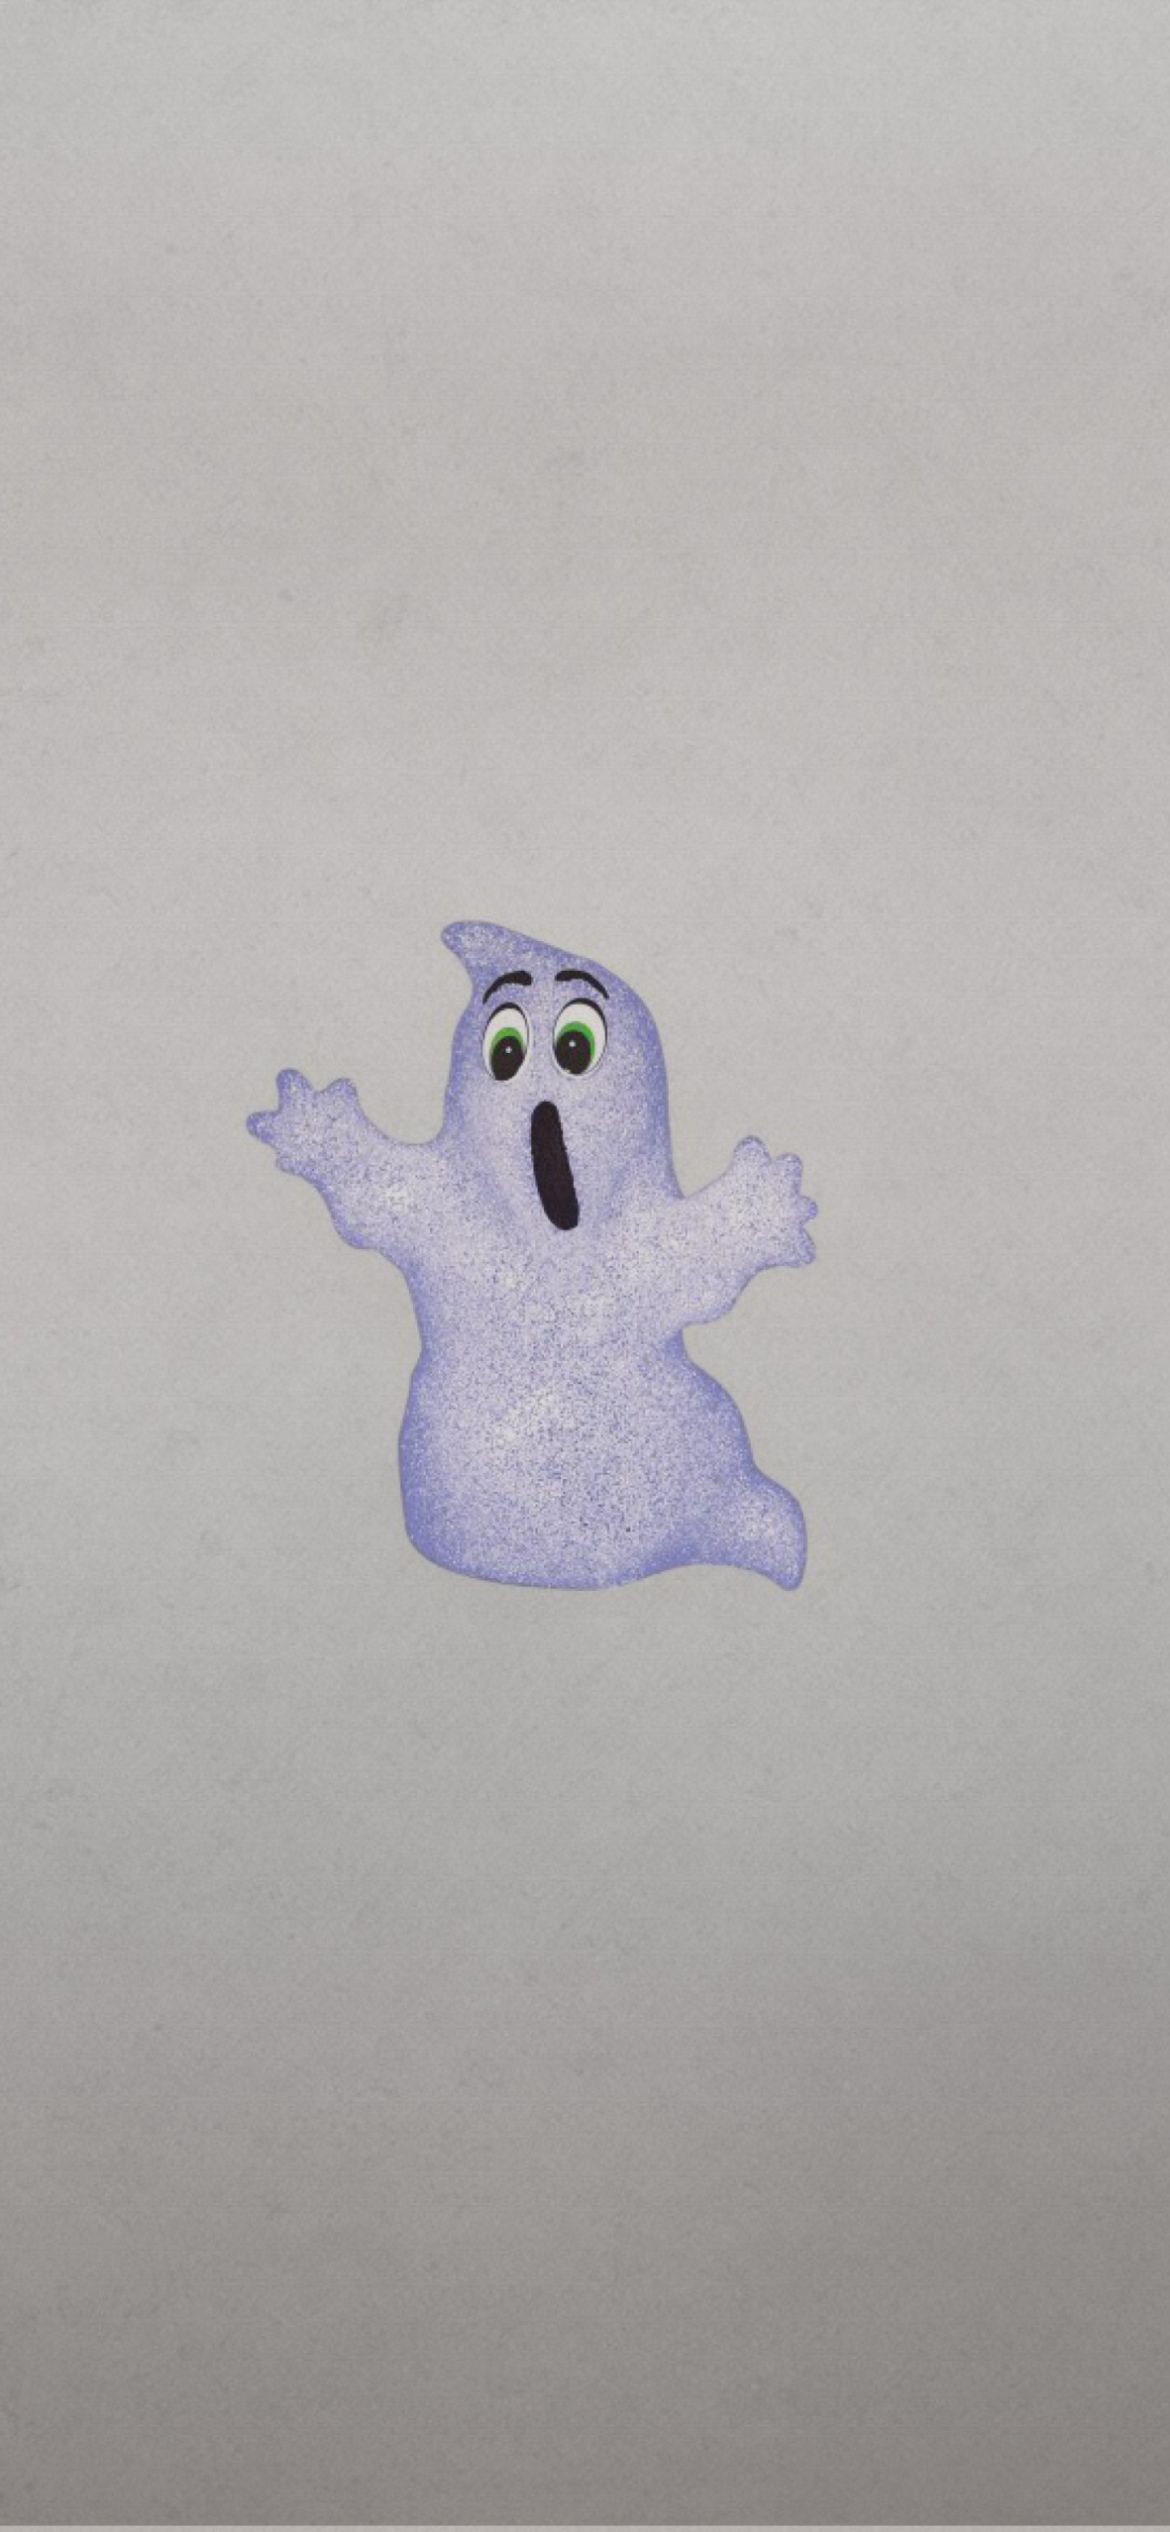 Funny Ghost Illustration wallpaper 1170x2532